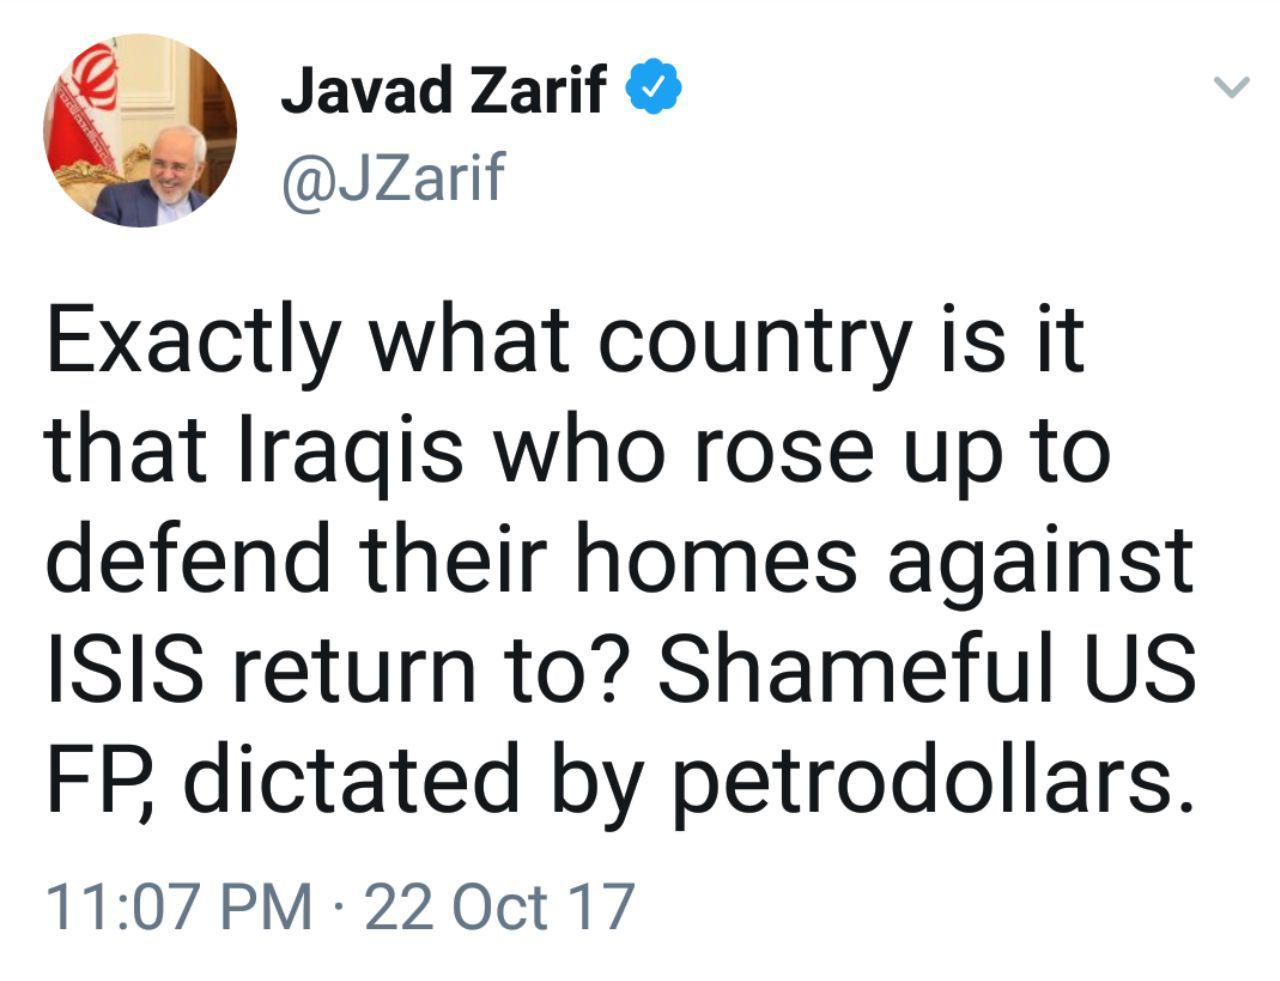 Zarif blasts 'US shameful foreign policy'